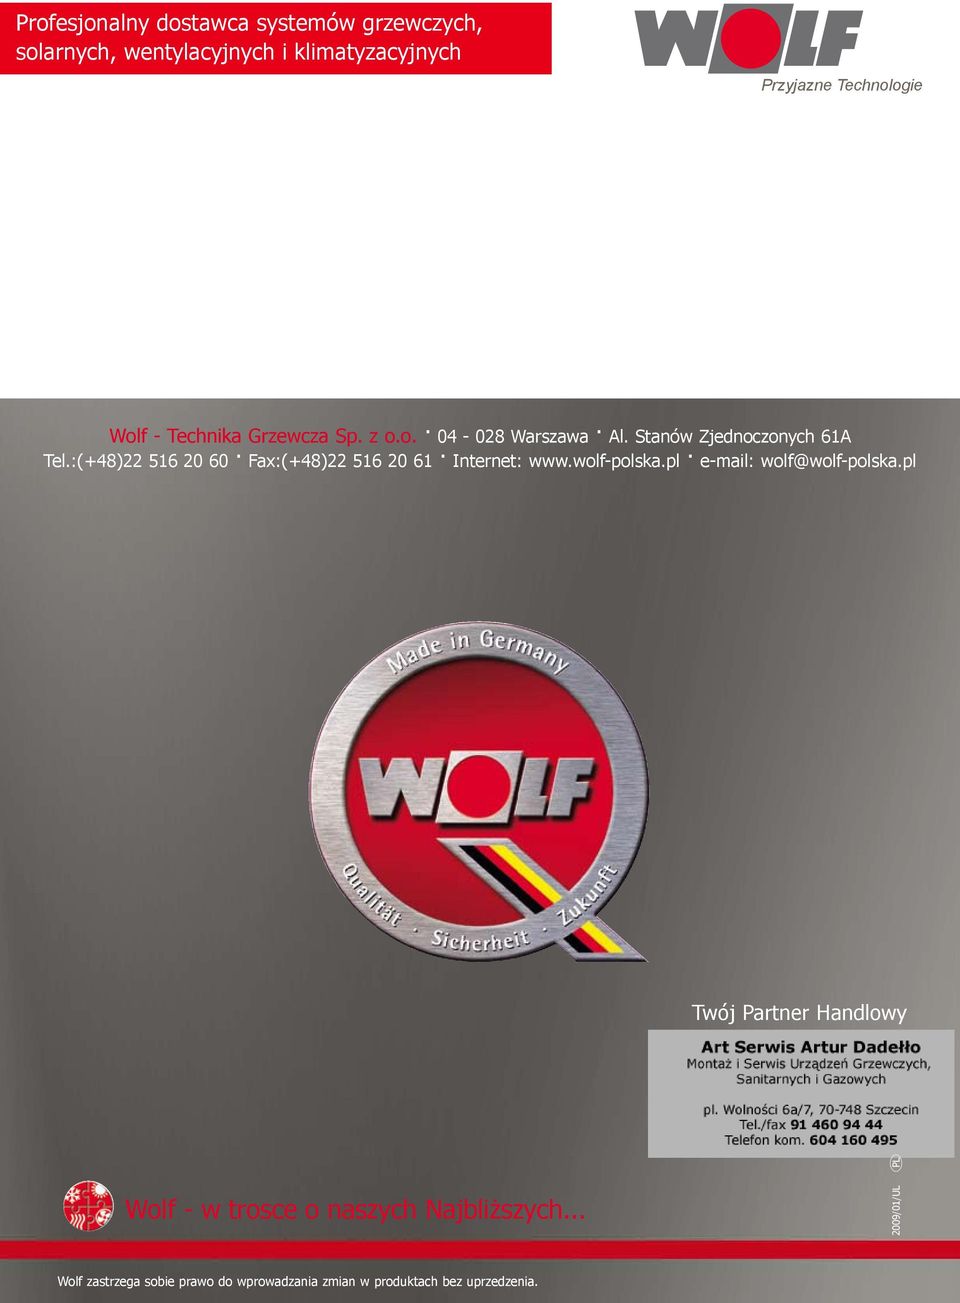 :(+48)22 516 20 60 Fax:(+48)22 516 20 61 Internet: www.wolf-polska.pl e-mail: wolf@wolf-polska.